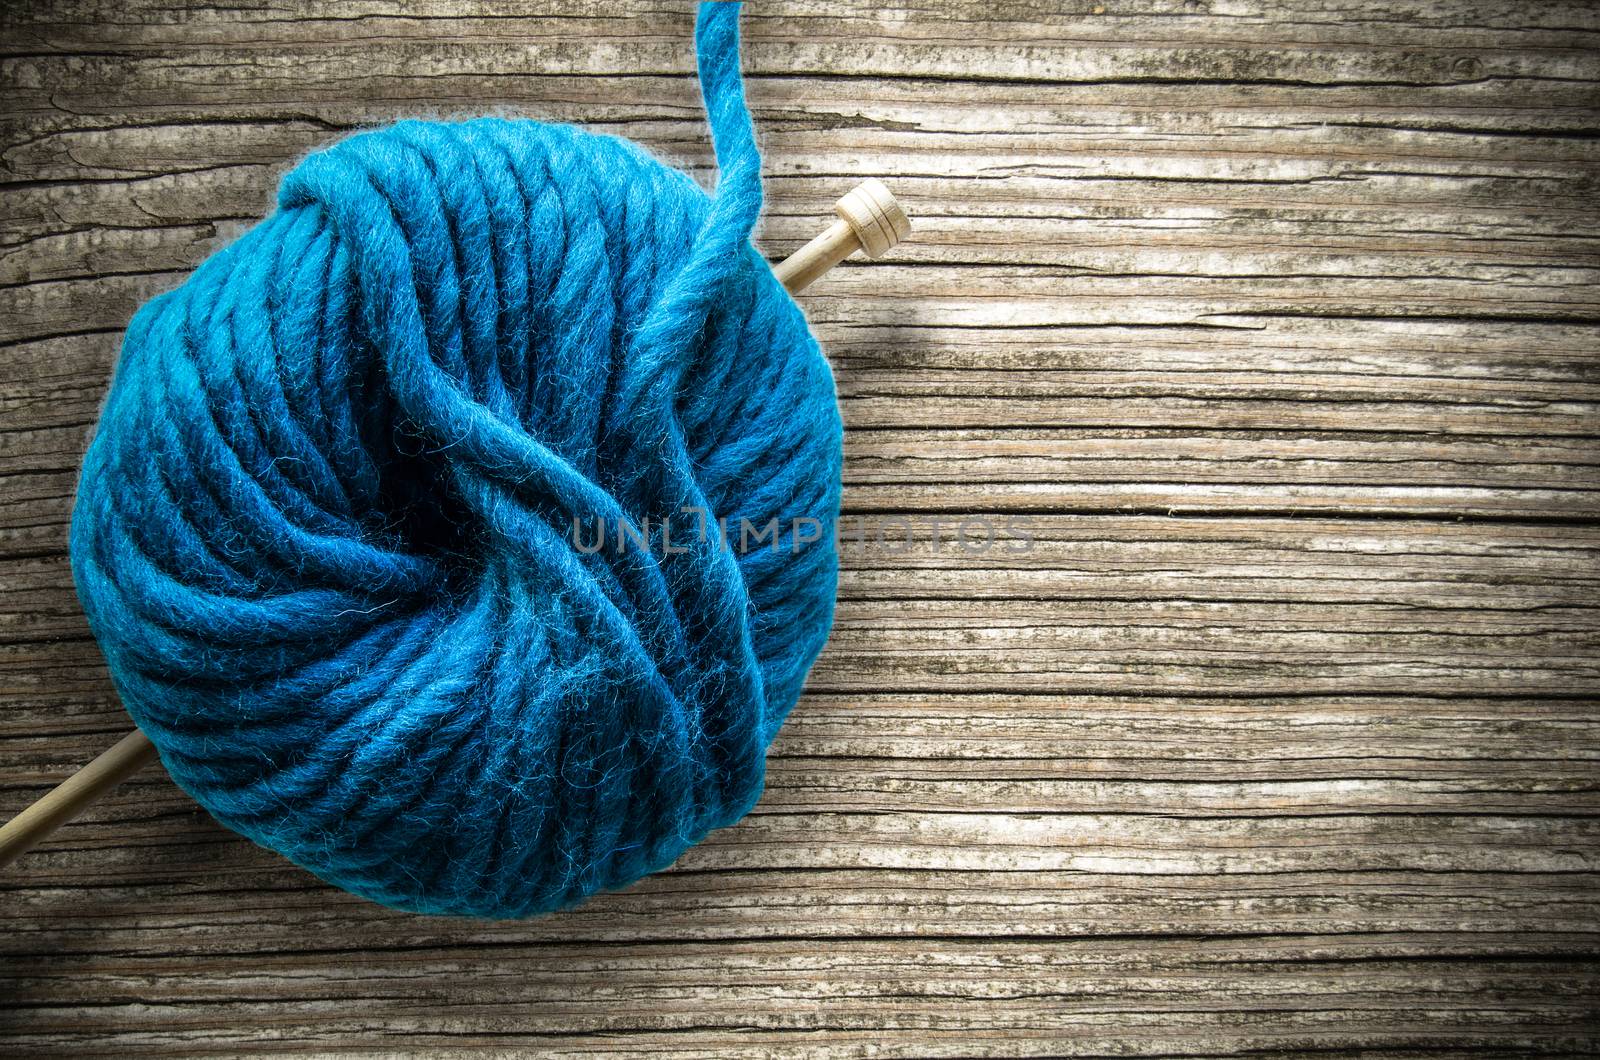 Retro Wool And Knitting Needle by mrdoomits